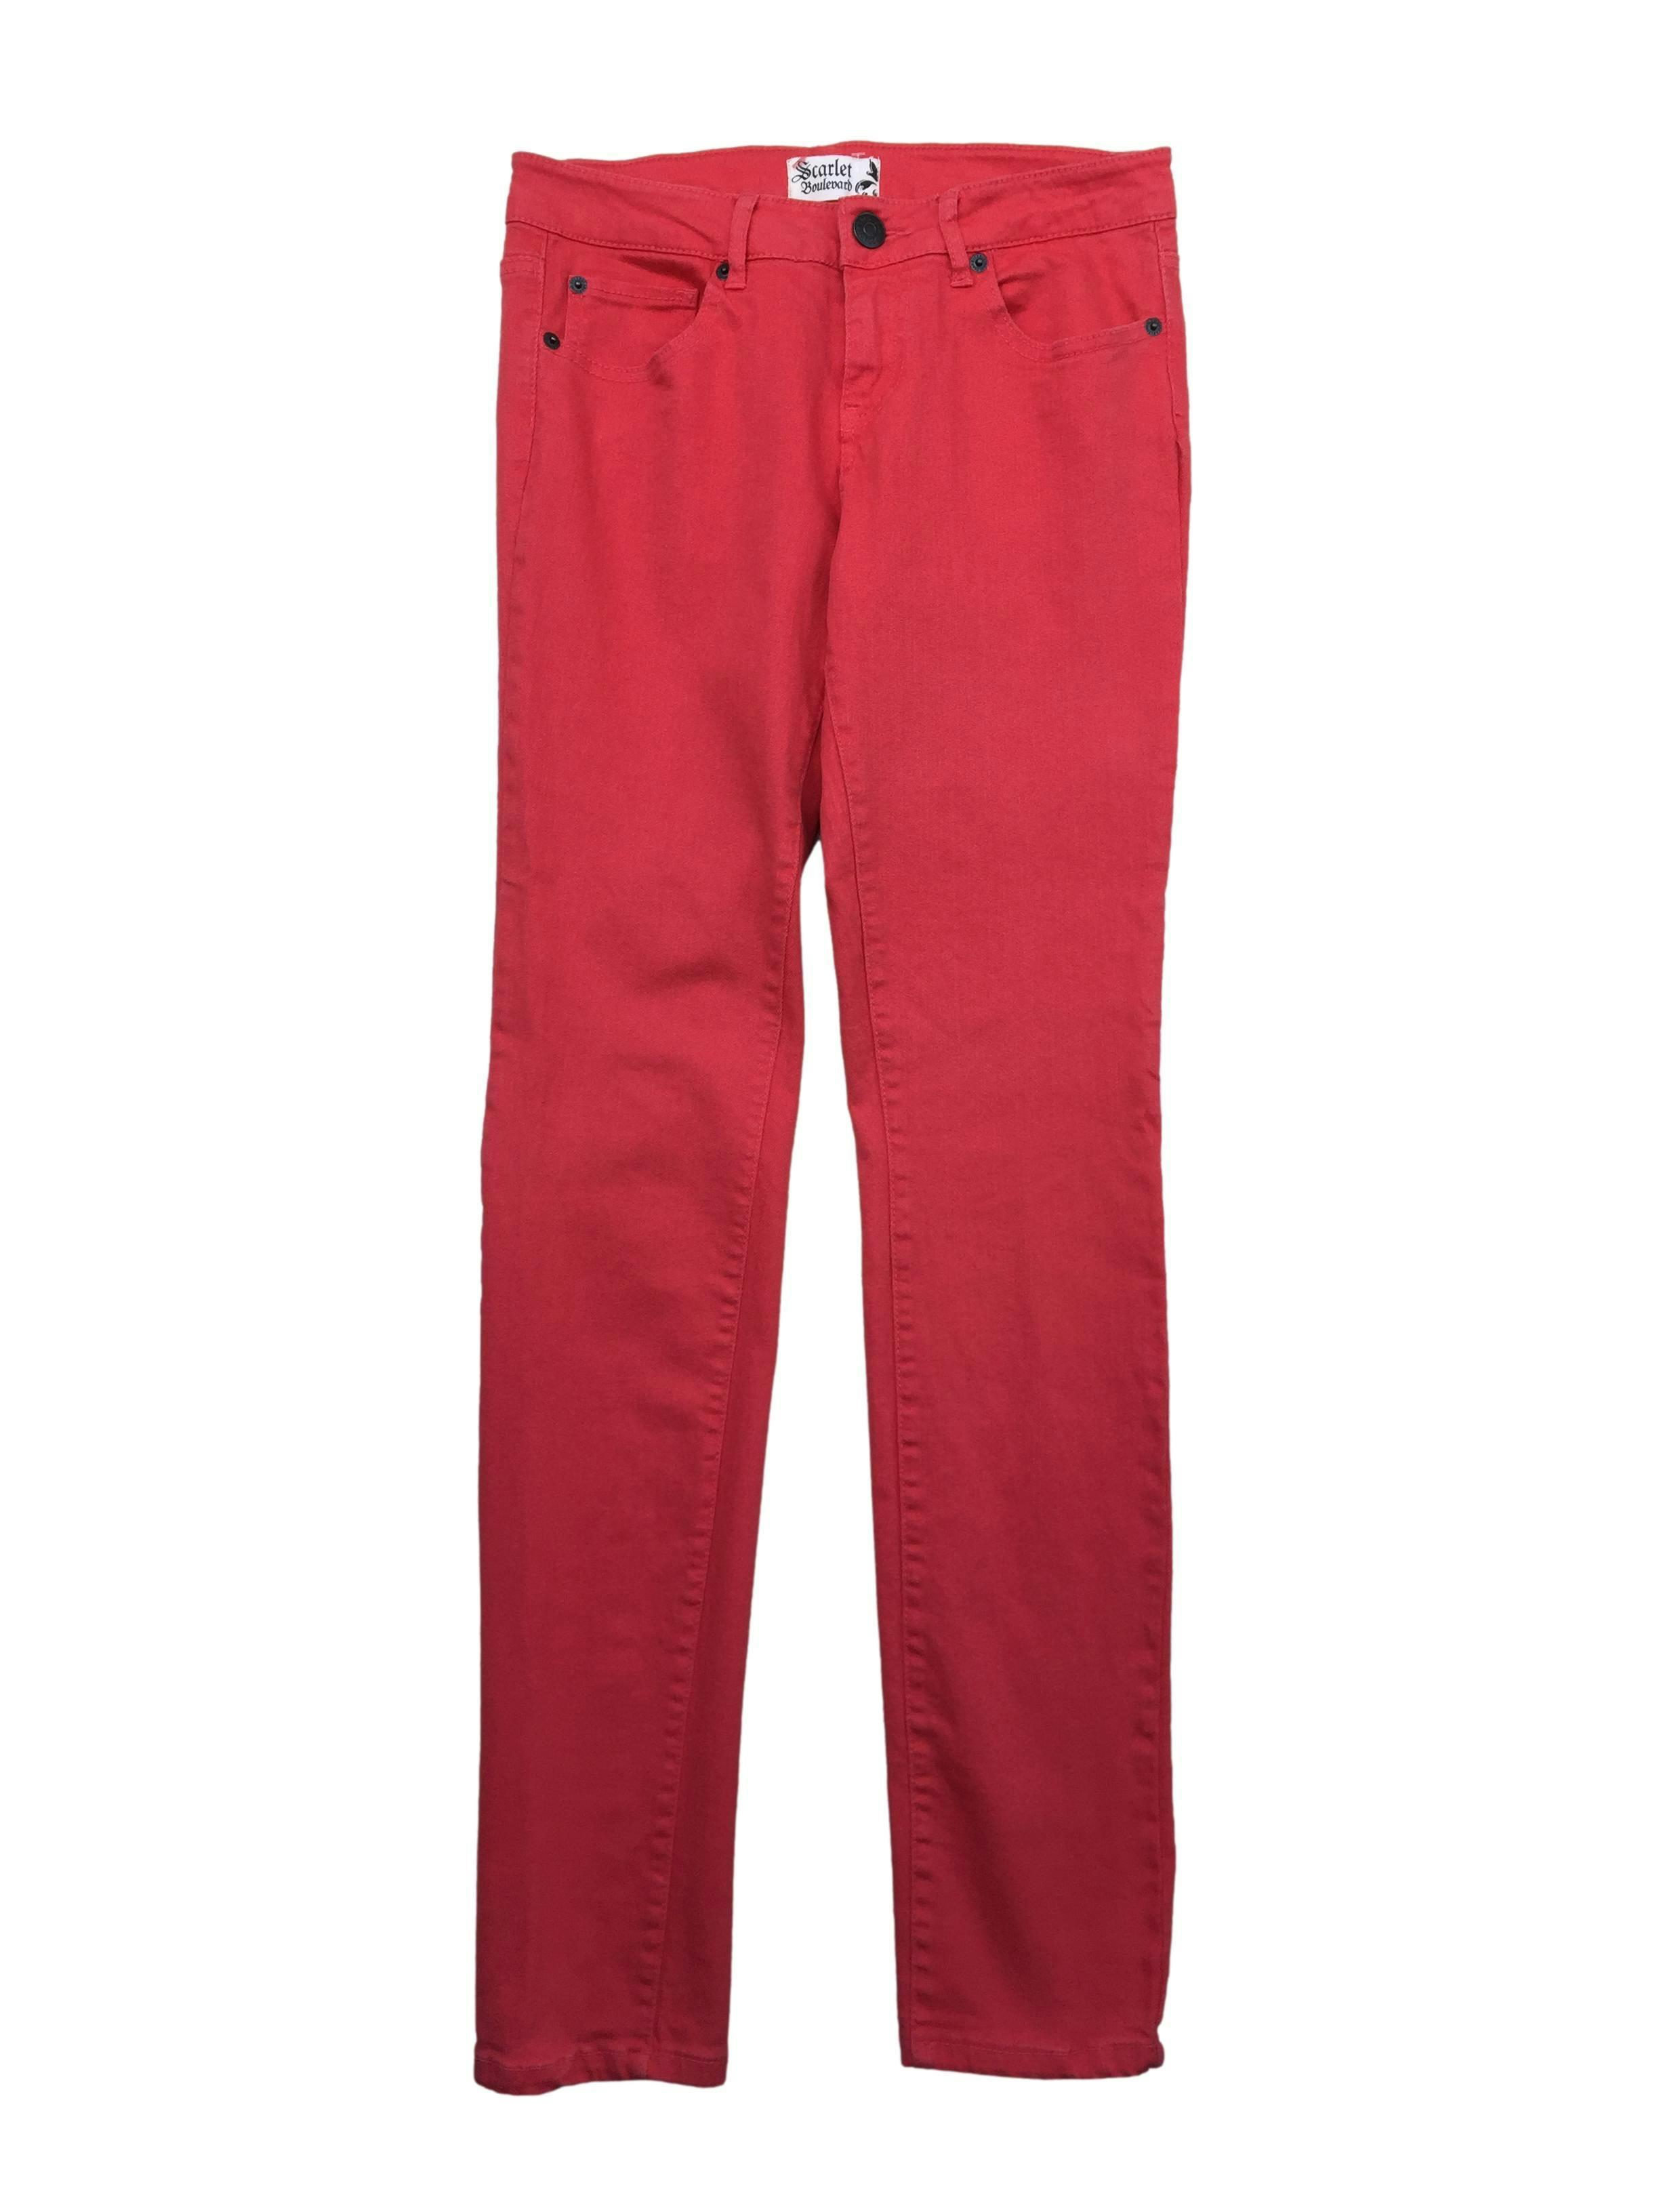 Skinny jean rojo 98% algodón, five-pockets. Cintura 74cm, Tiro 21cm, Largo 98cm.